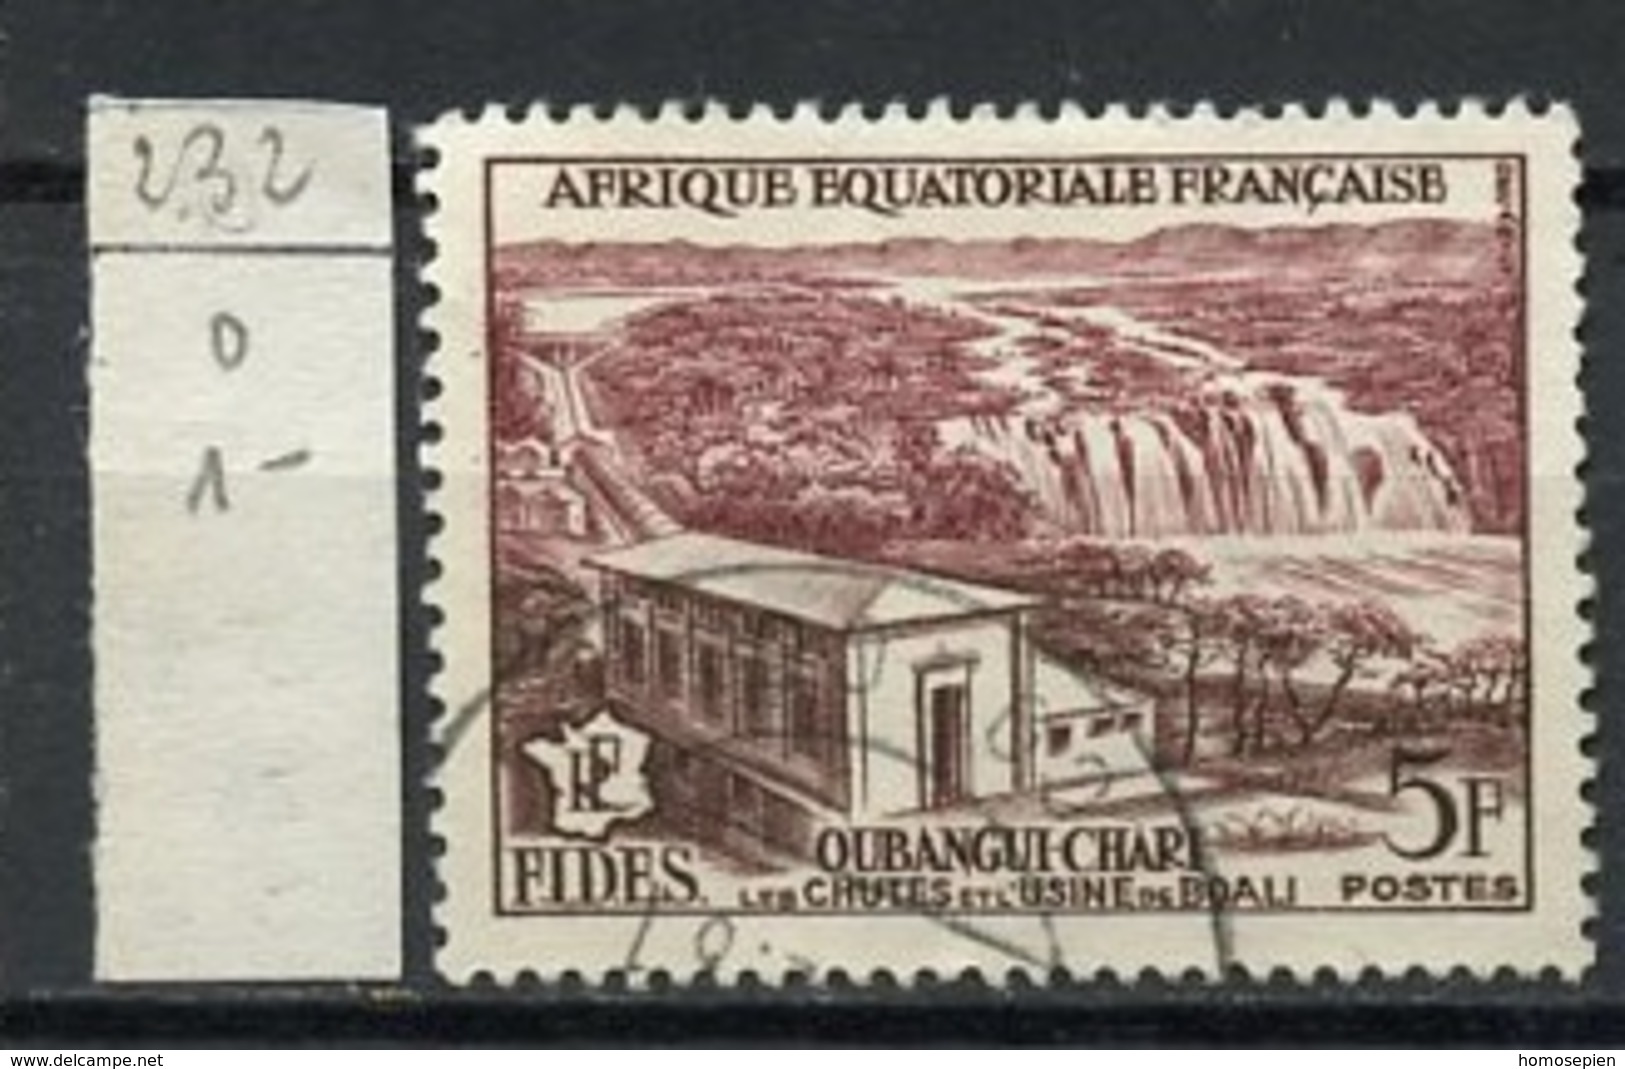 AEF - Französisch Äquatorialafrika - French Equatorial Africa 1956 Y&T N°232 - Michel N°298 (o) - 5f Usine De Boali - Oblitérés